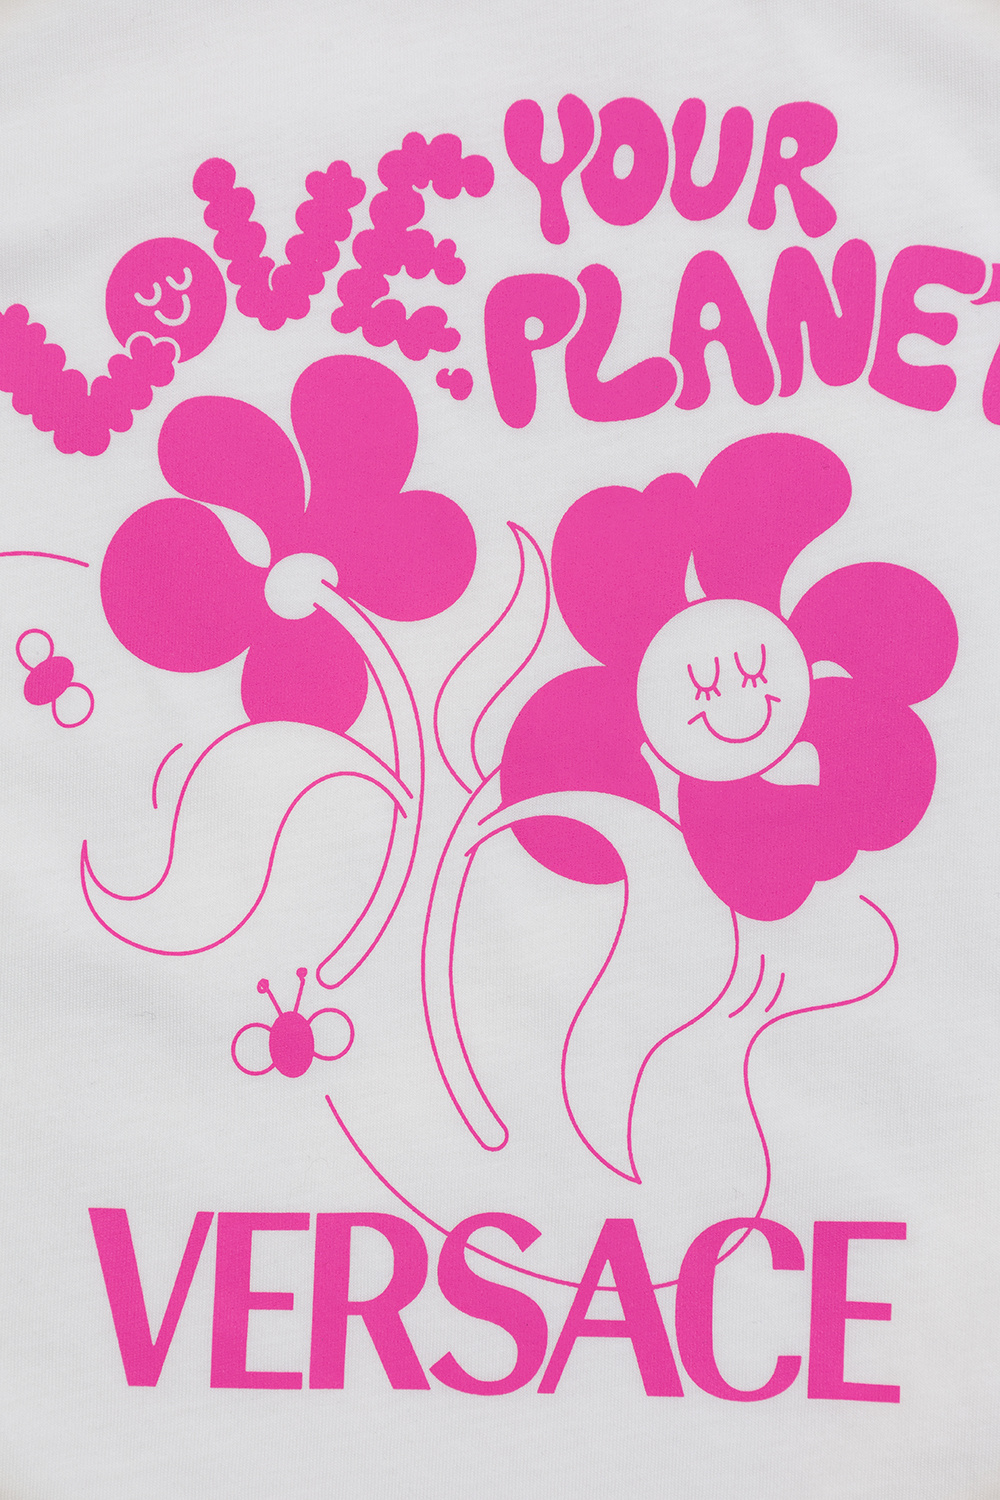 Versace Ki Printed T-shirt